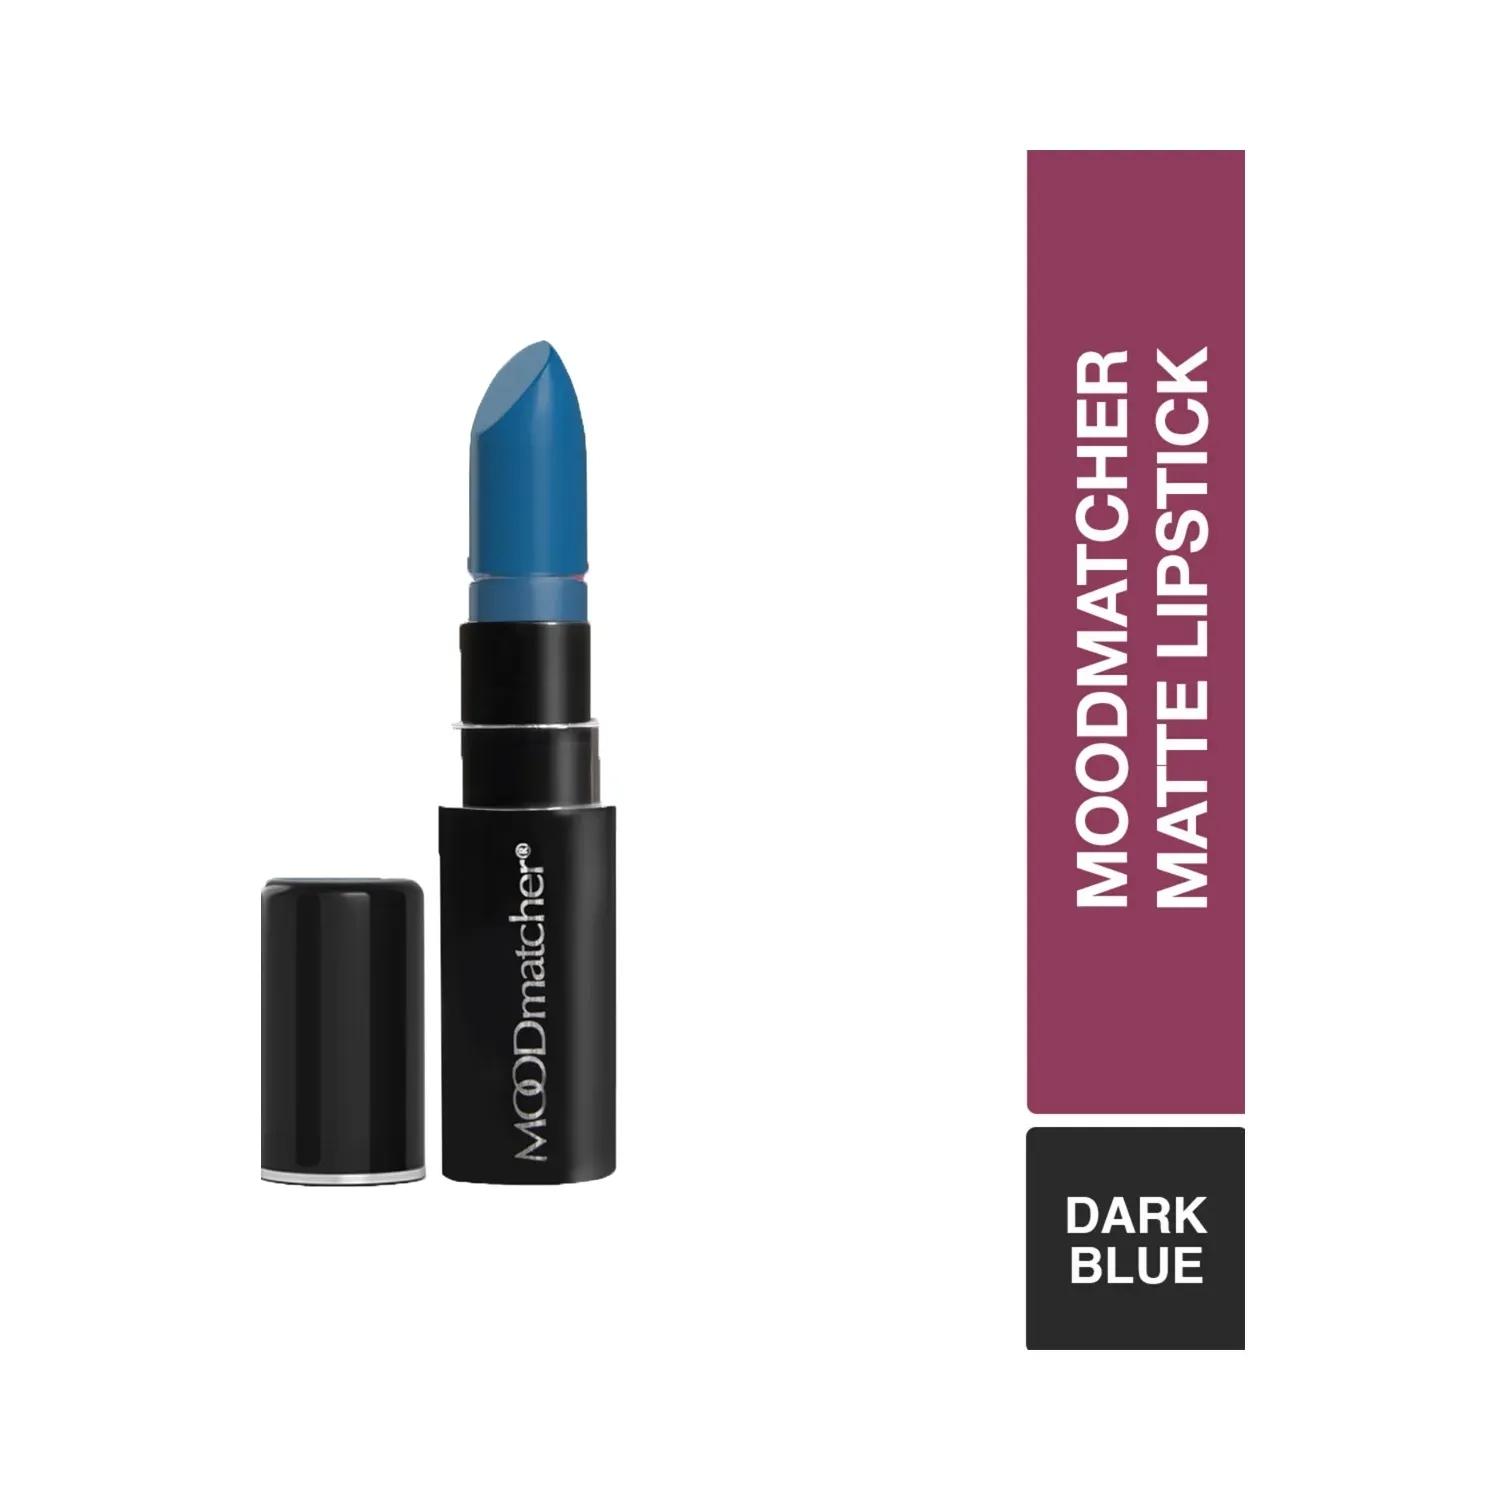 fran wilson moodmatcher lipstick - dark blue (3.5g)